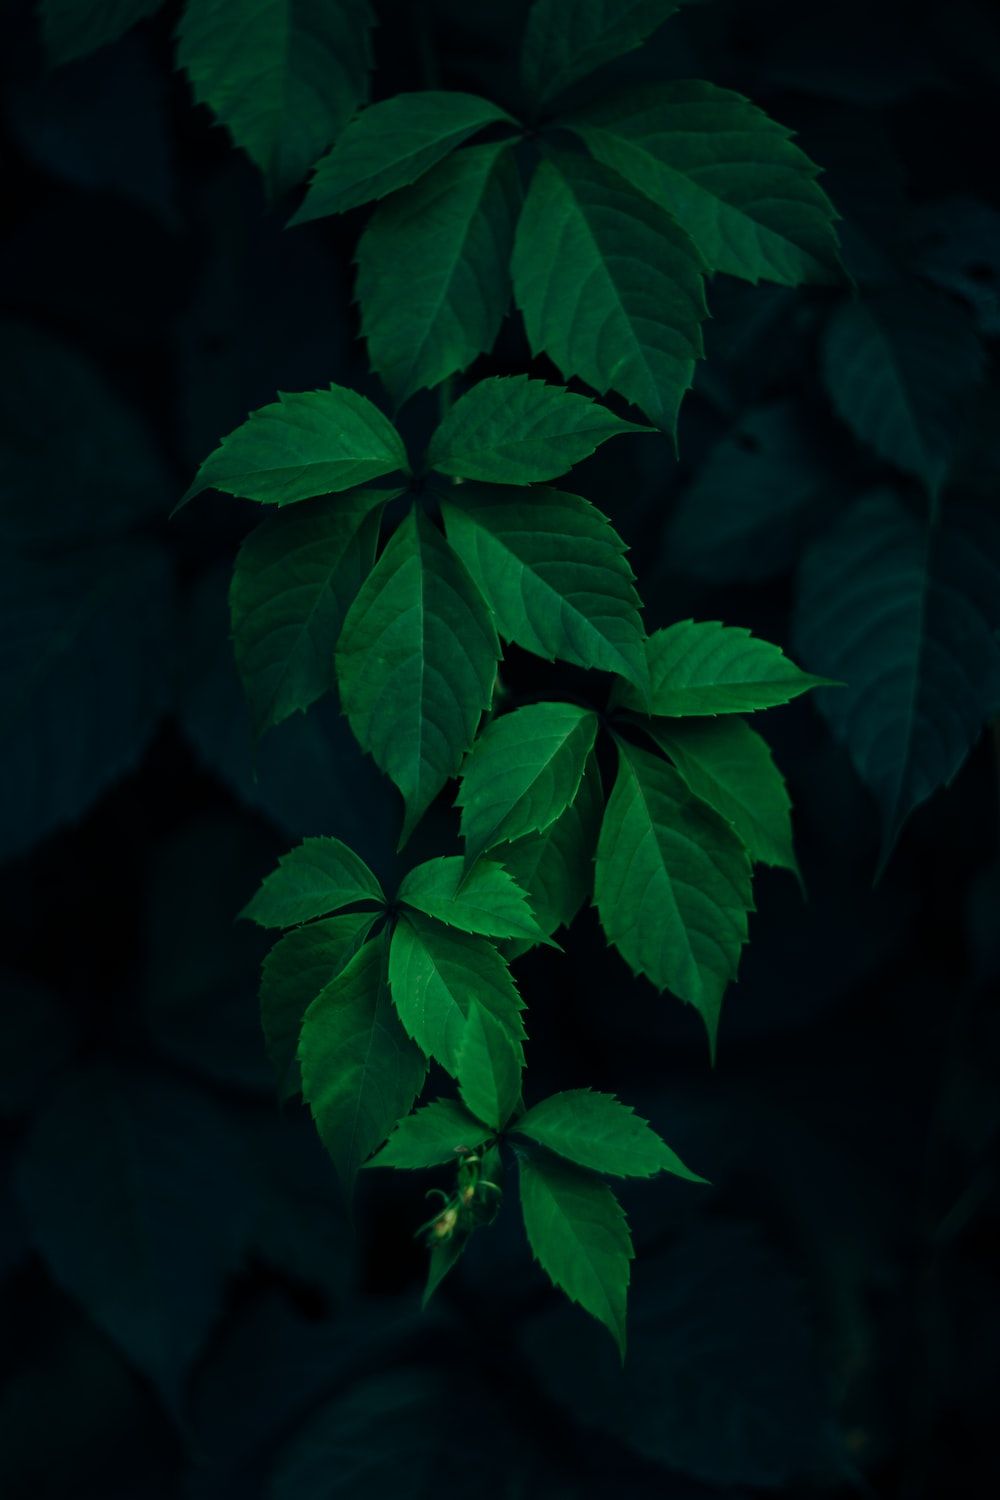 Dark Green Leaf Picture. Download Free Image